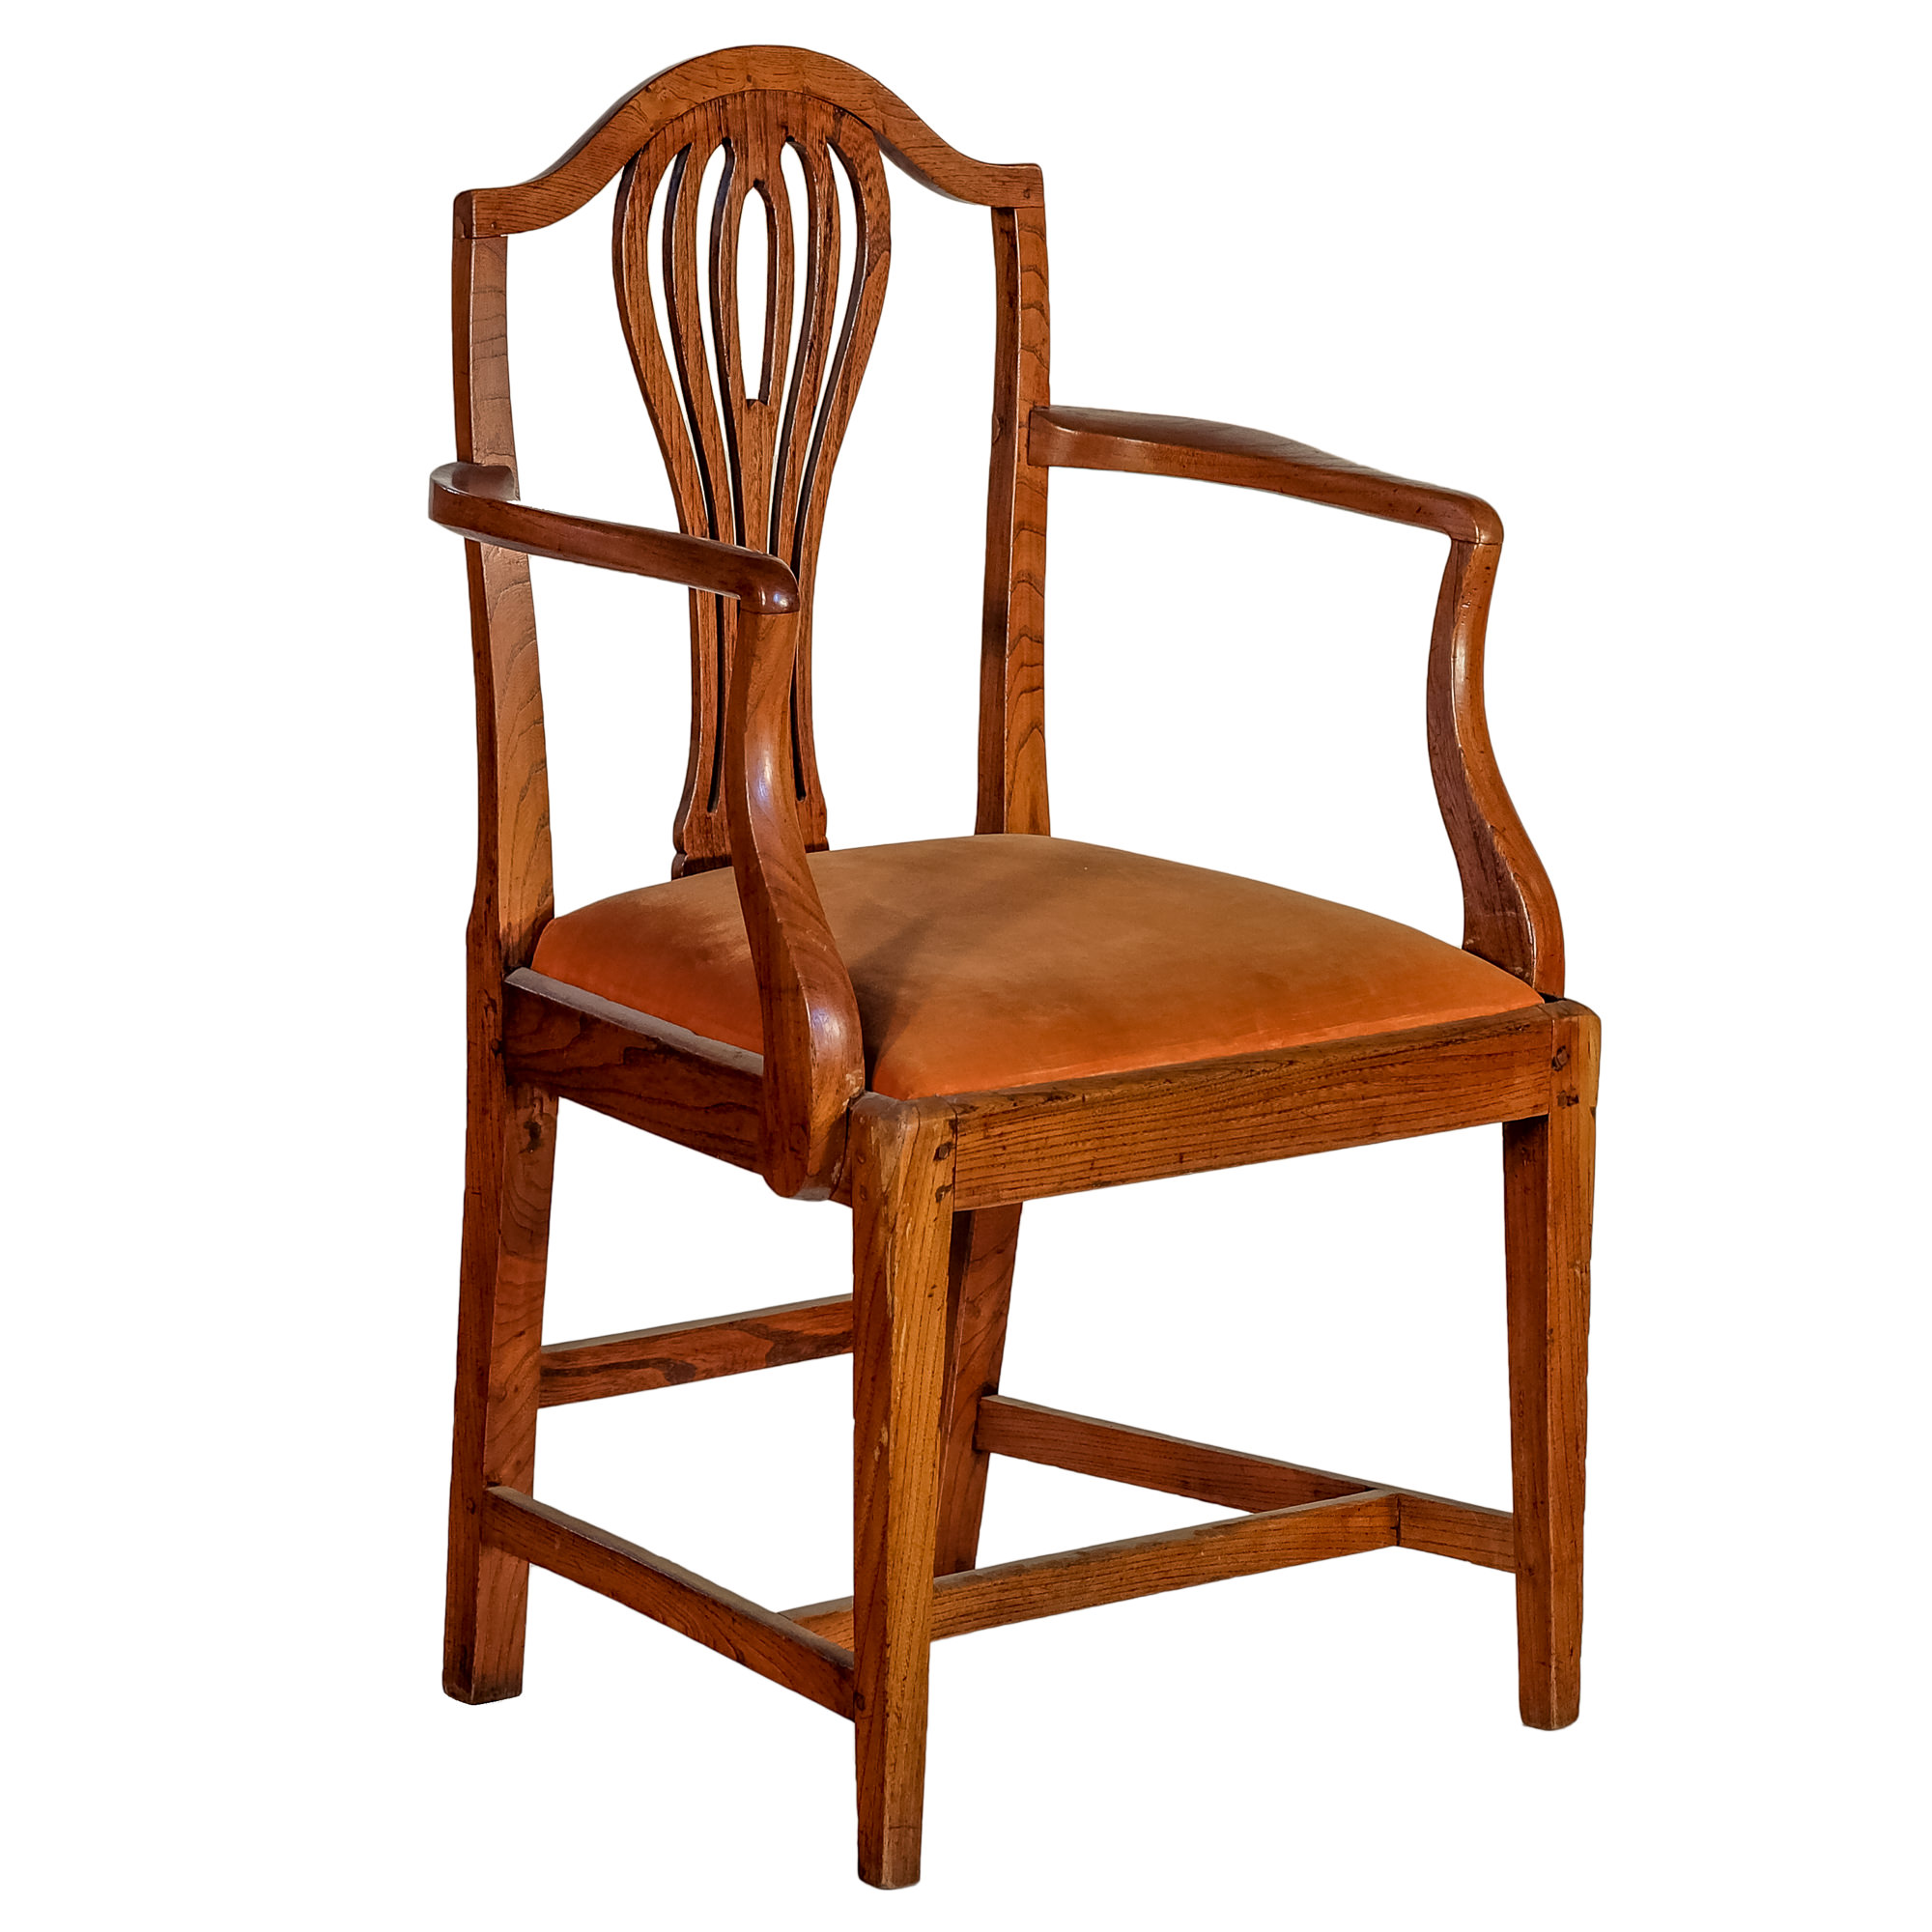 'Georgian Style Elm Elbow Chair with Salmon Velvet Upholstery Late 19th Century or Earlier'